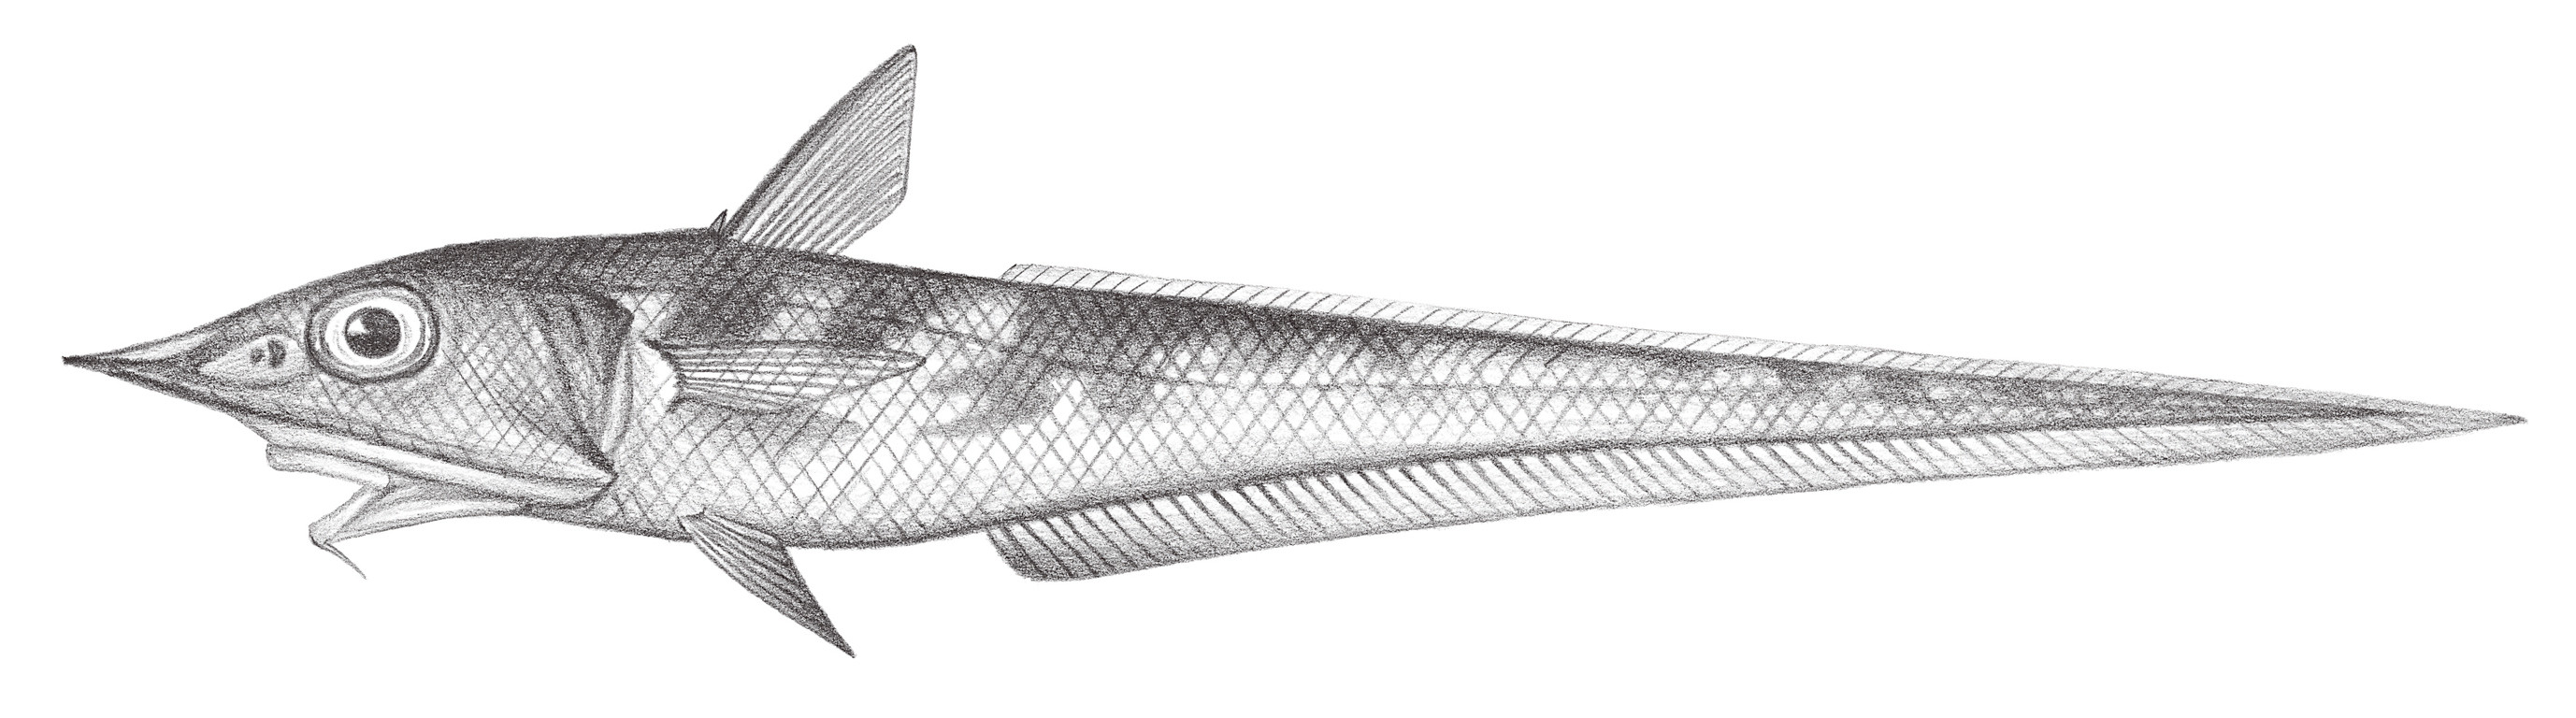 556.	台灣腔吻鱈 Caelorinchus formosanus Okamura, 1964